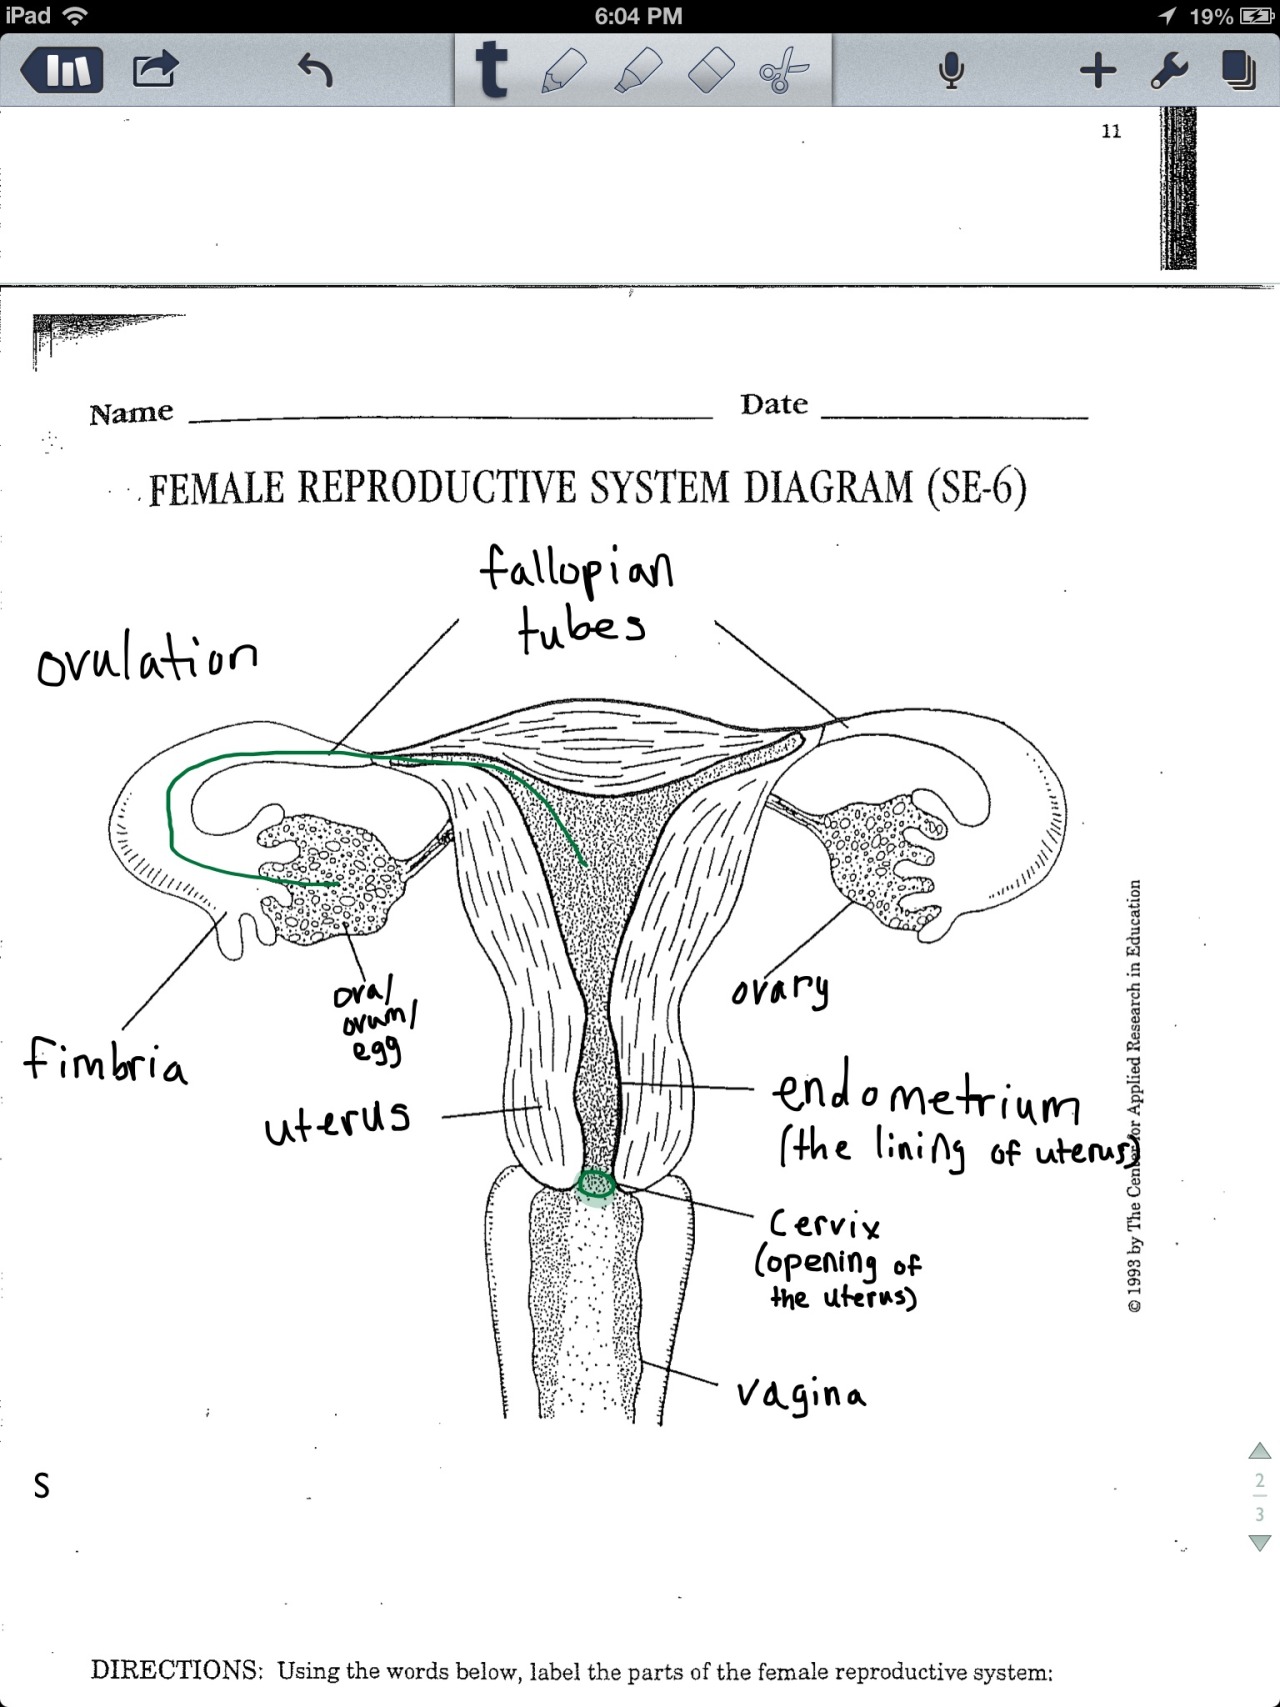 Female Reproductive System Diagram External View AflamNeeeak